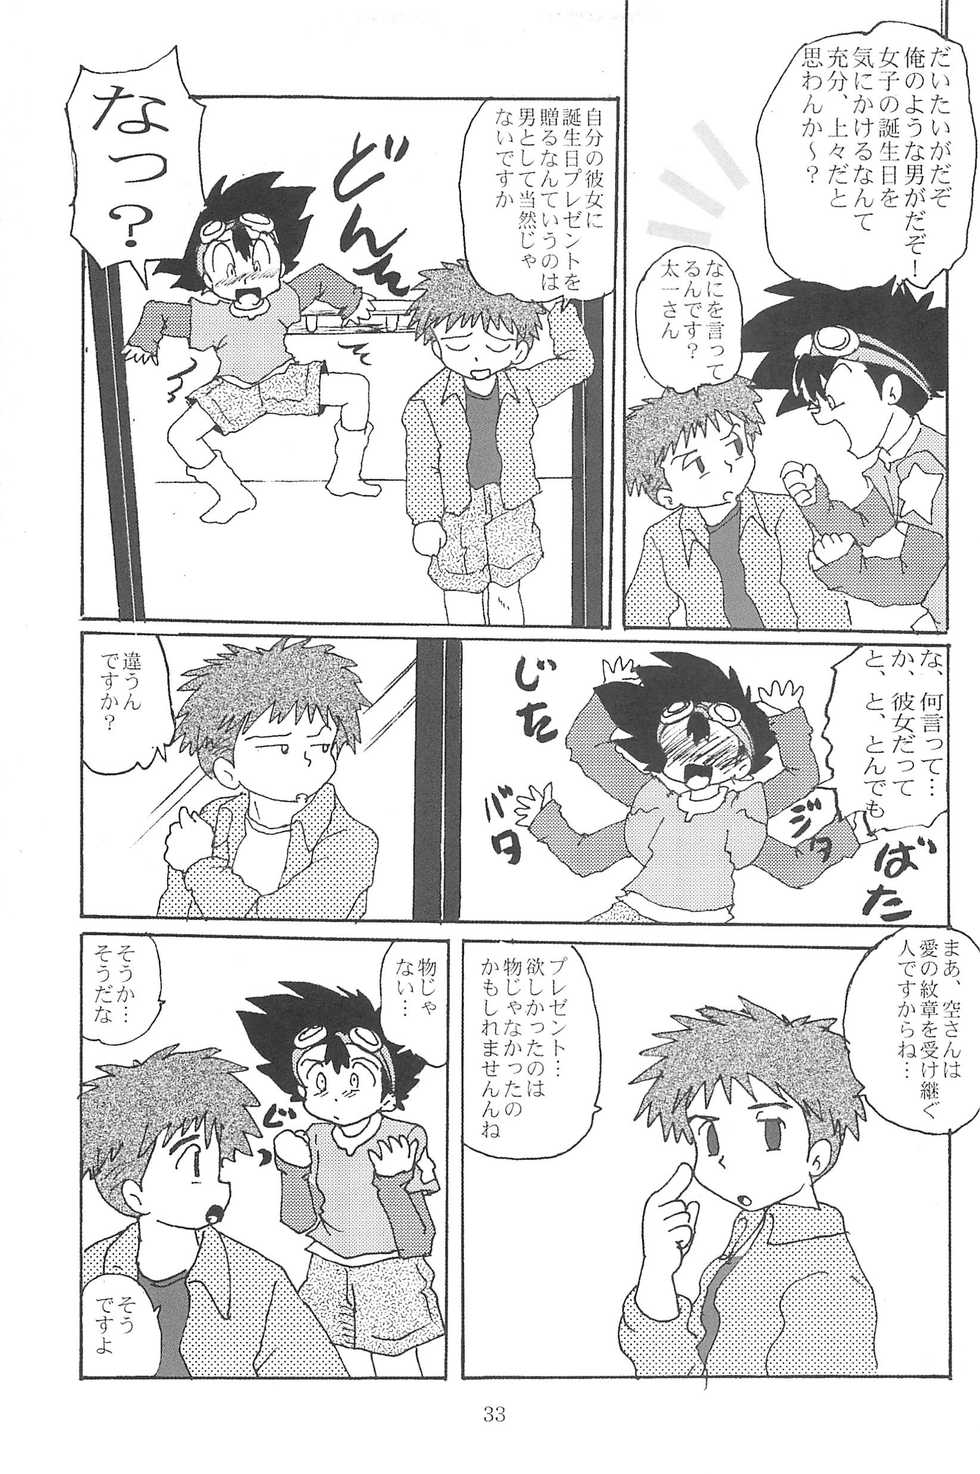 (CR28) [Izumiya] Blow Up 8 (Digimon Adventure 02) - Page 35